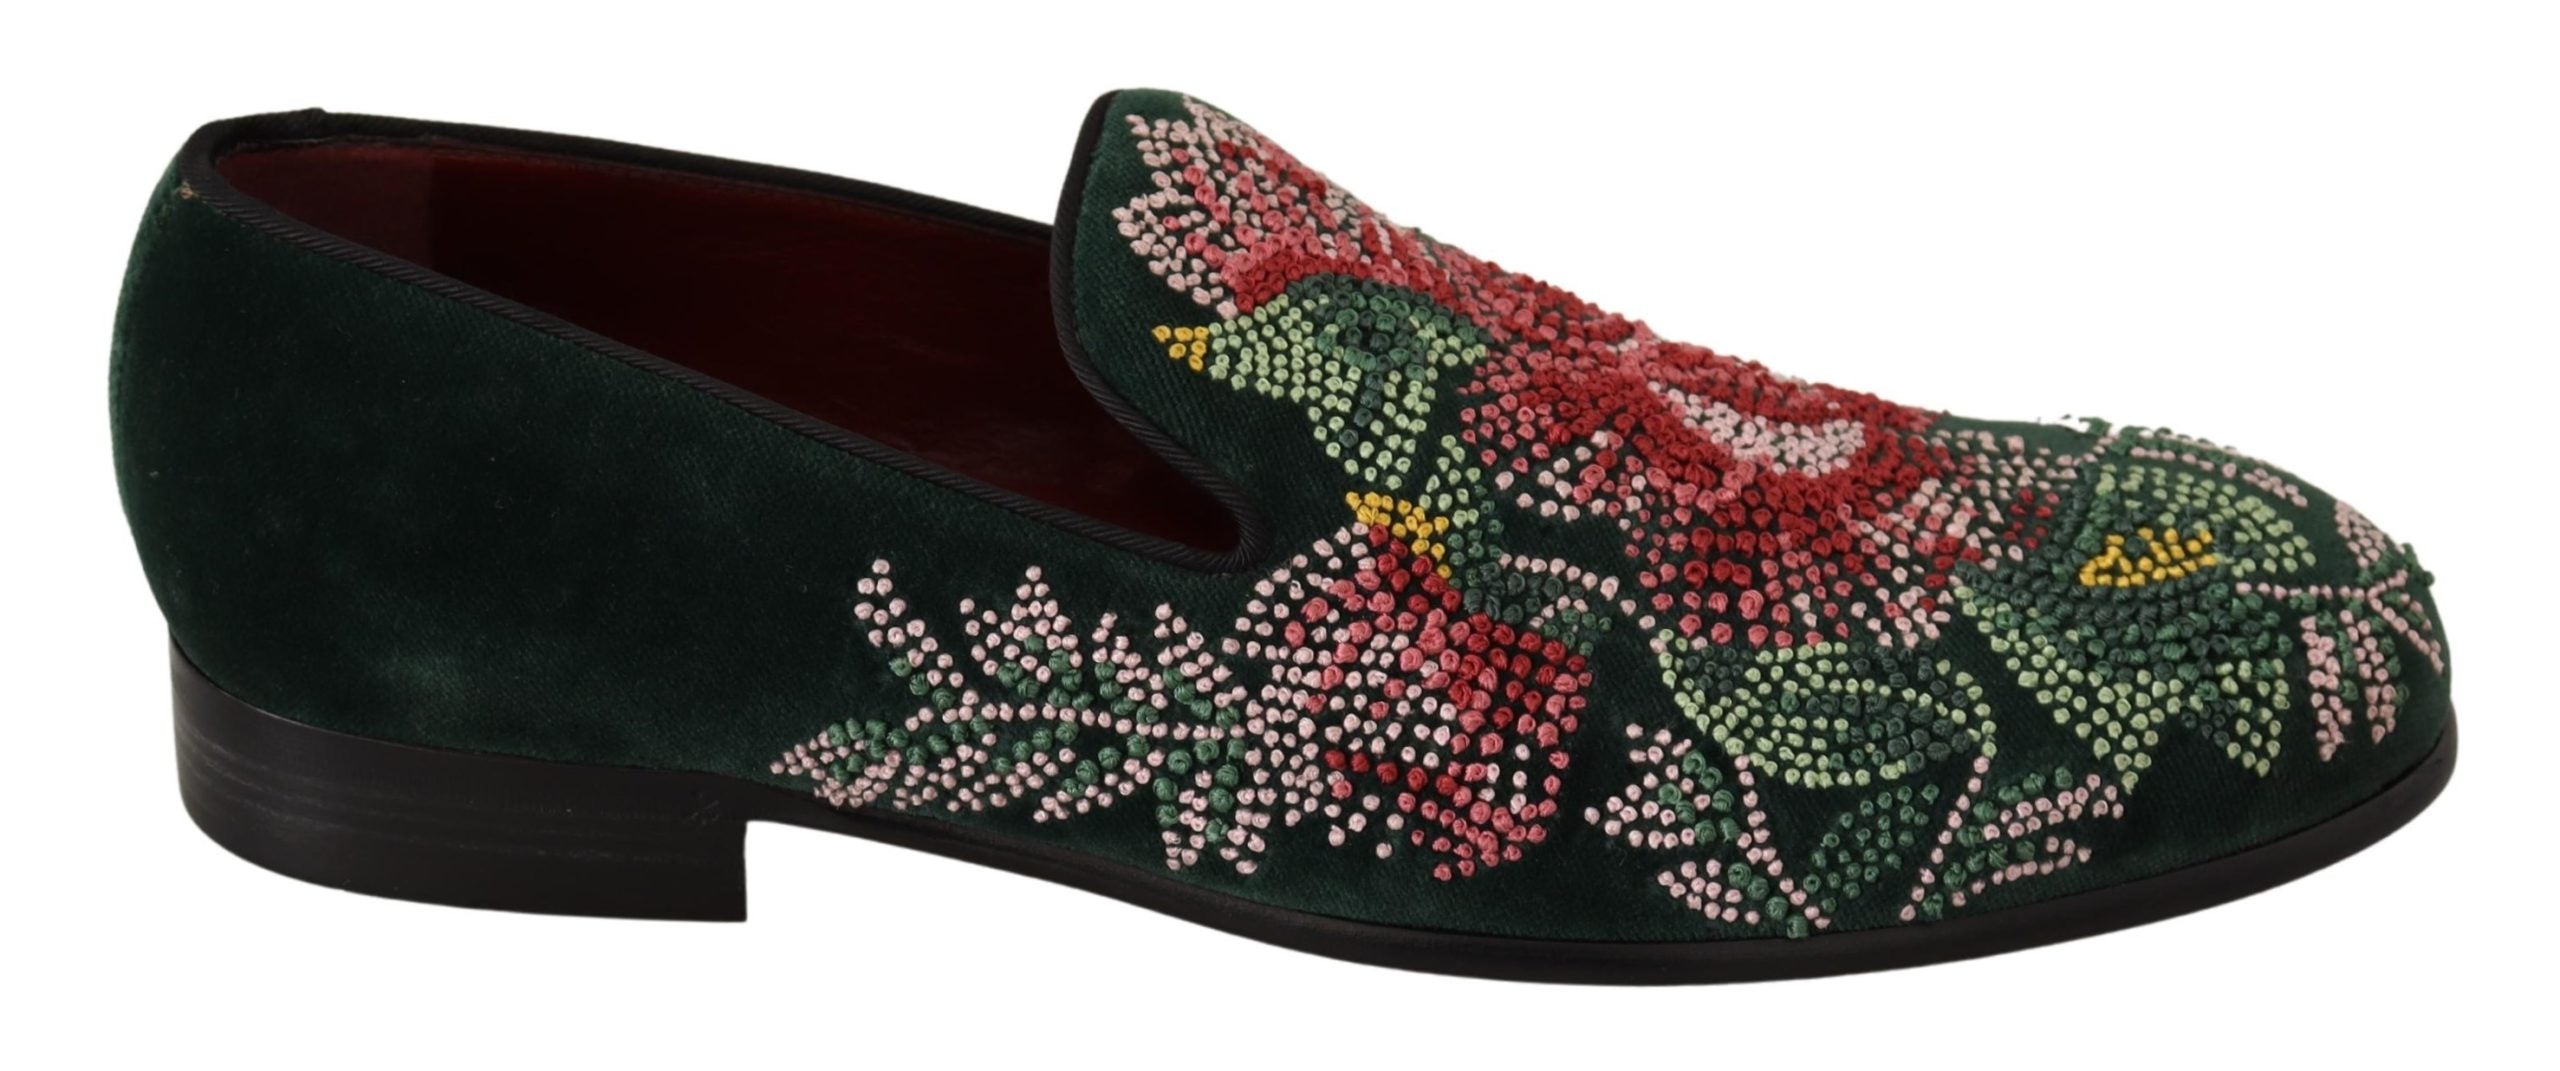 DOLCE & GABBANA Dolce & Gabbana Velvet Floral Embroidery Loafers Men's Shoes